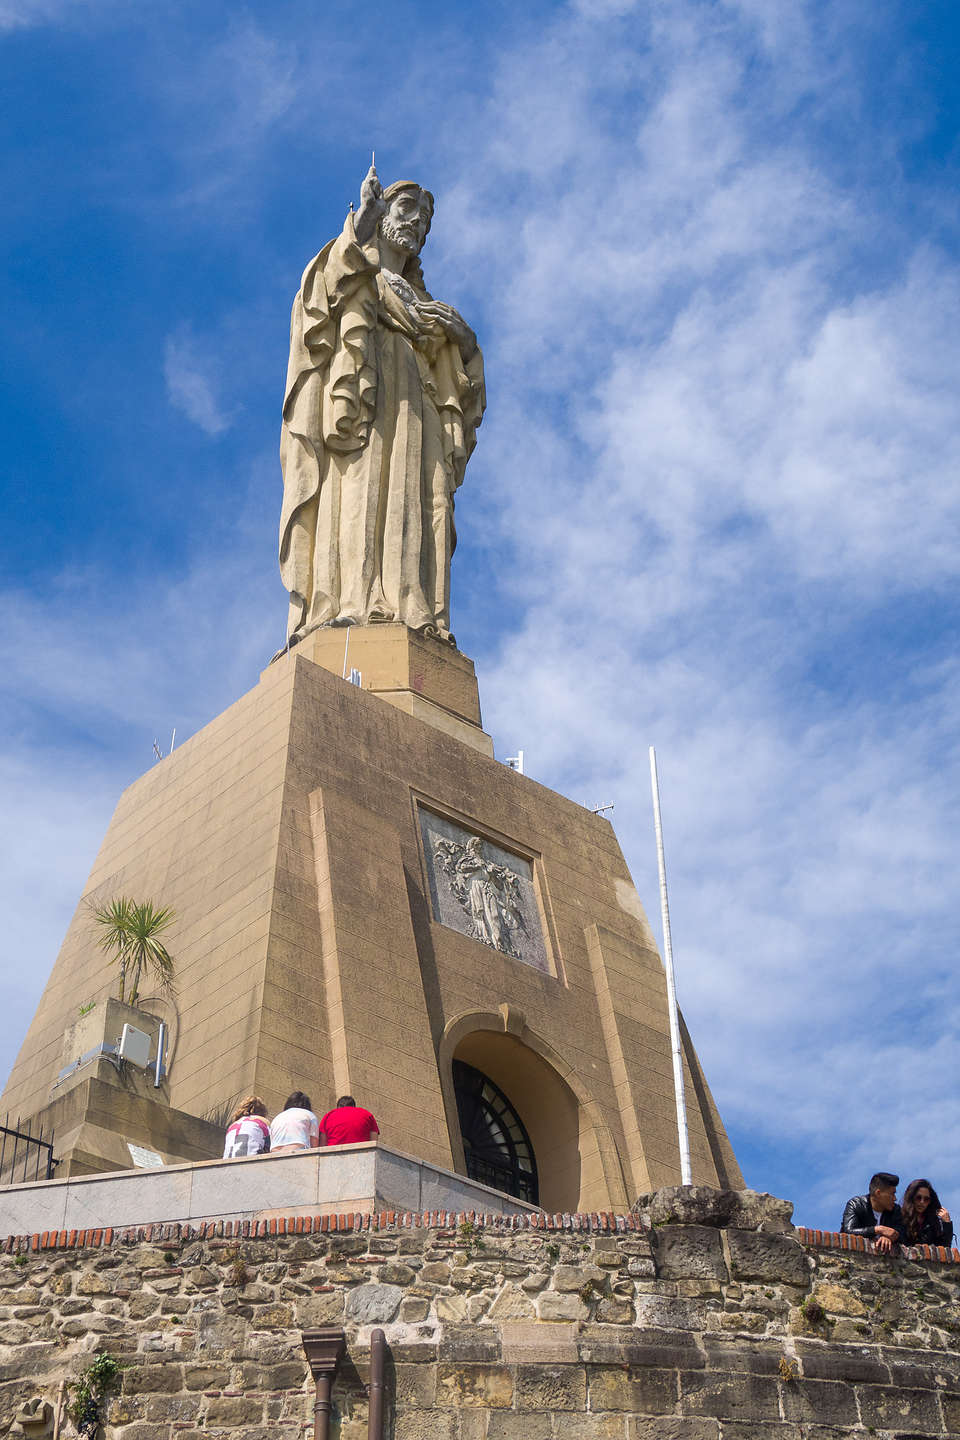 40-foot Jesus statue atop Mount Urgull